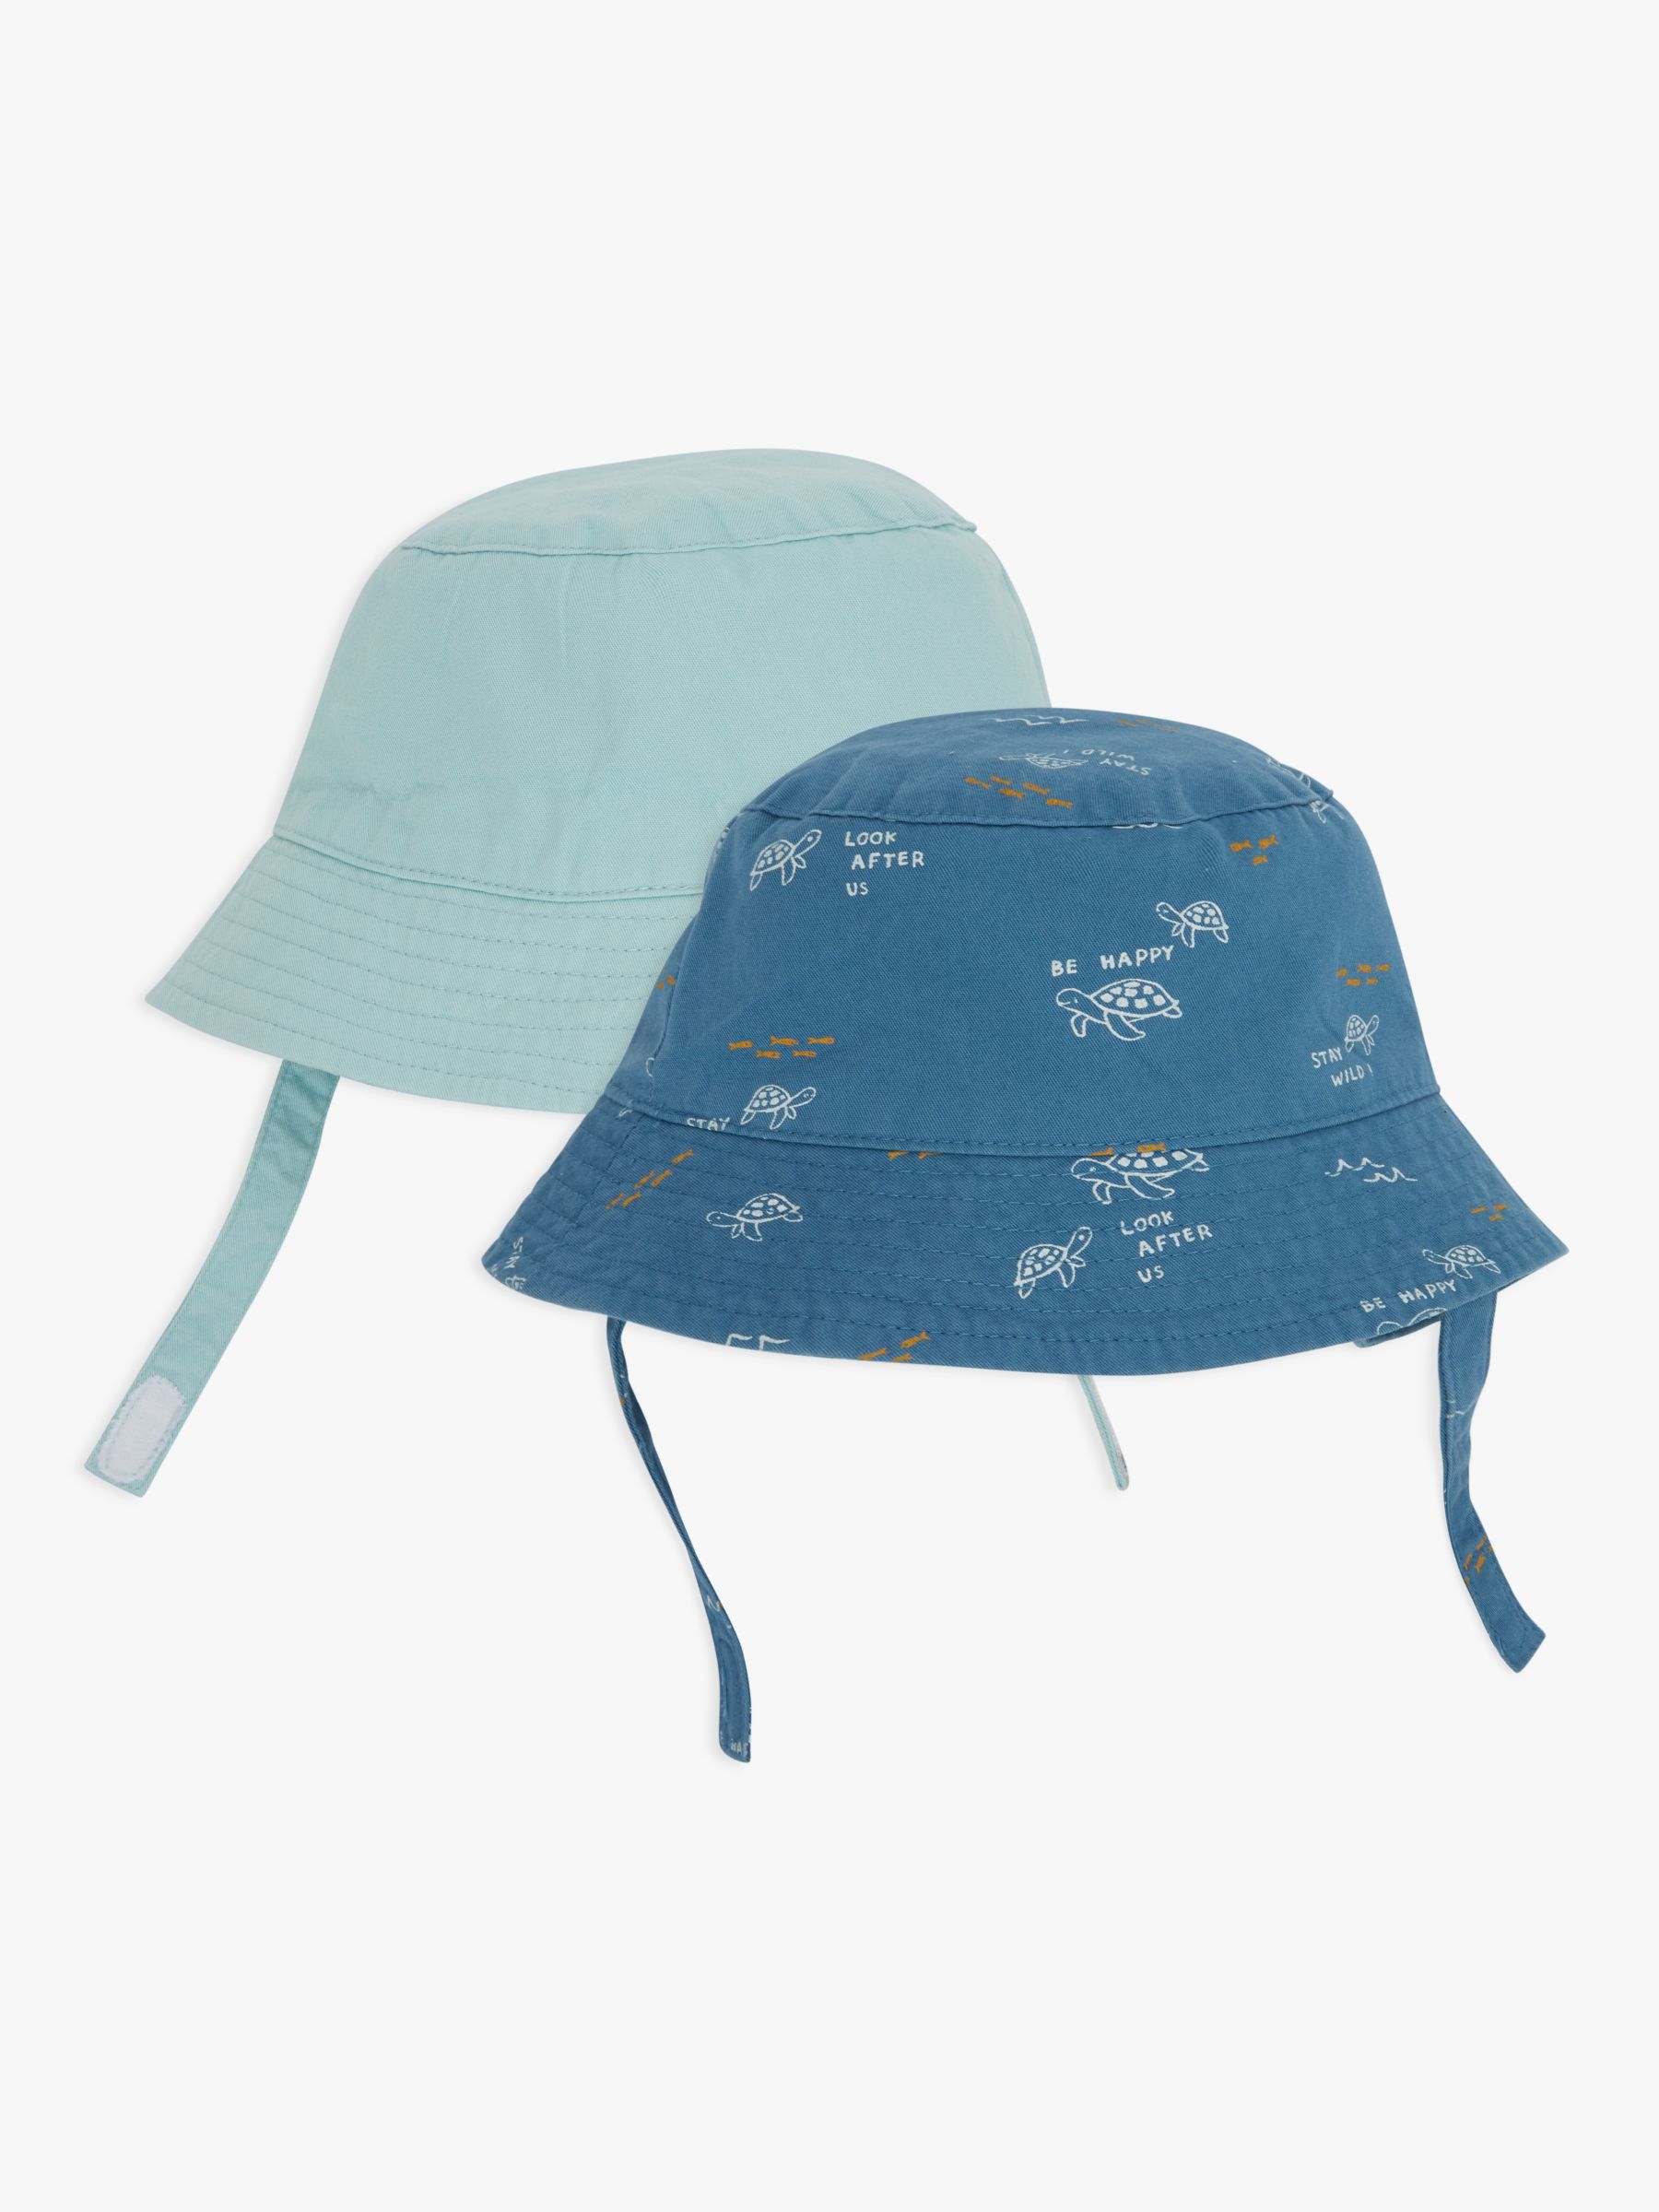 John Lewis Baby Turtle Bucket Hats, Set of 2, Blue